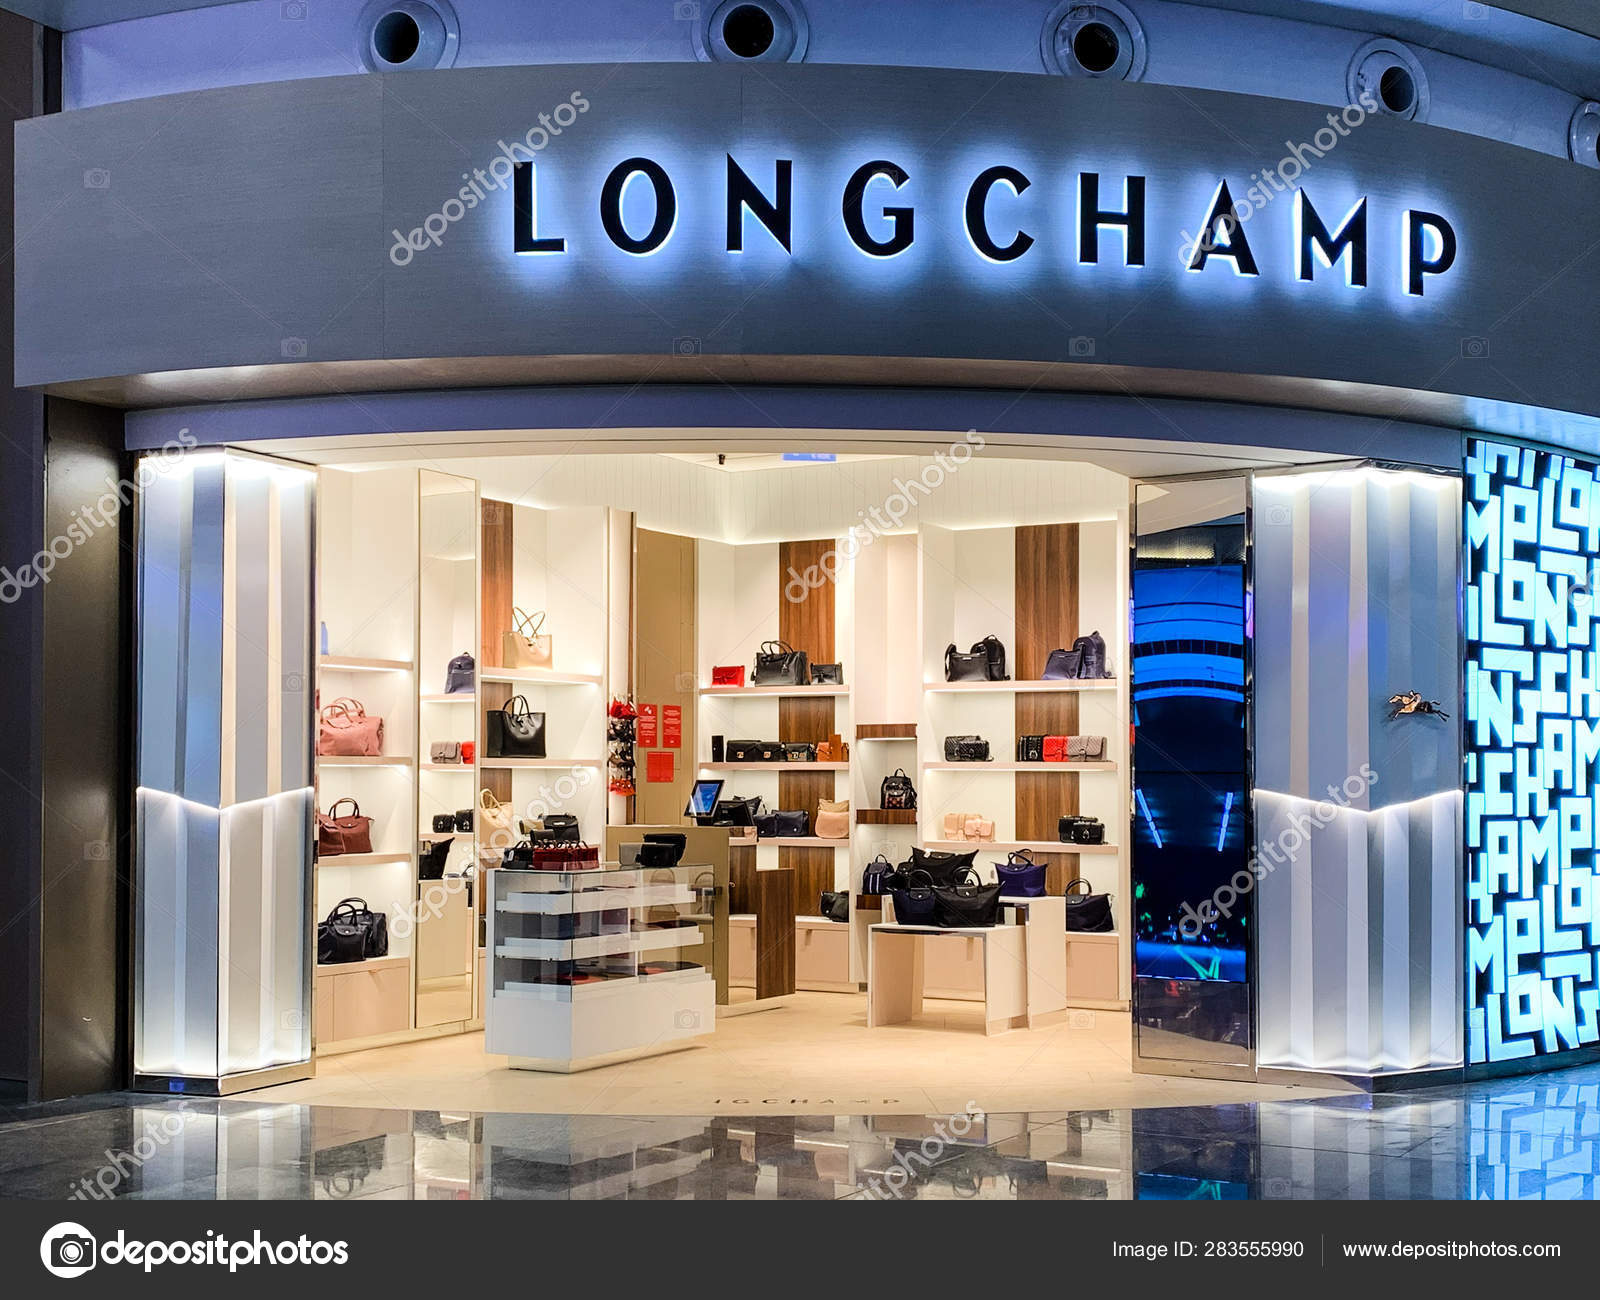 Longchamp shop in a mall. Longchamp is 